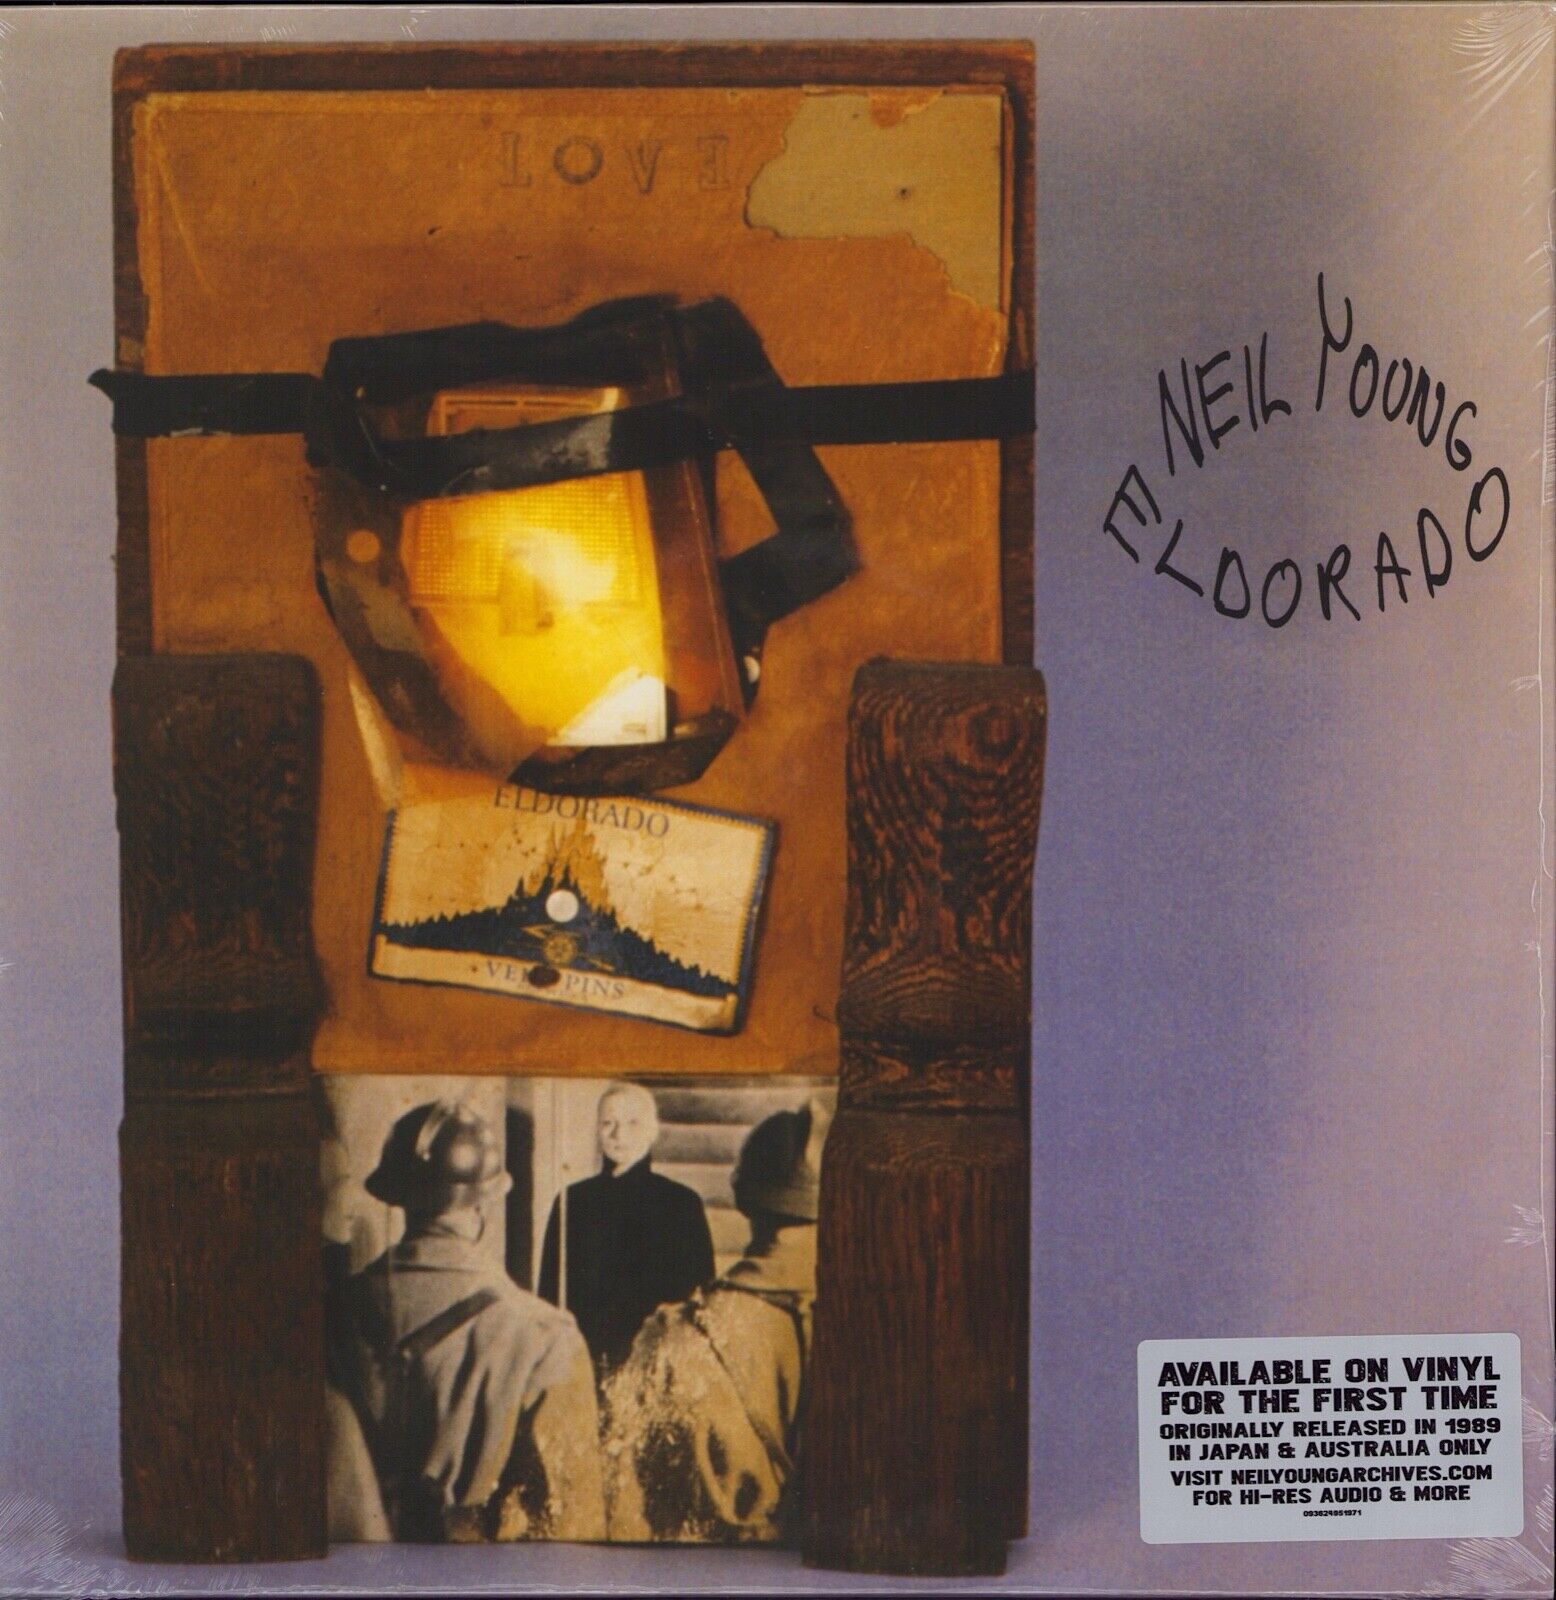 Neil Young + The Restless - Eldorado Vinyl LP